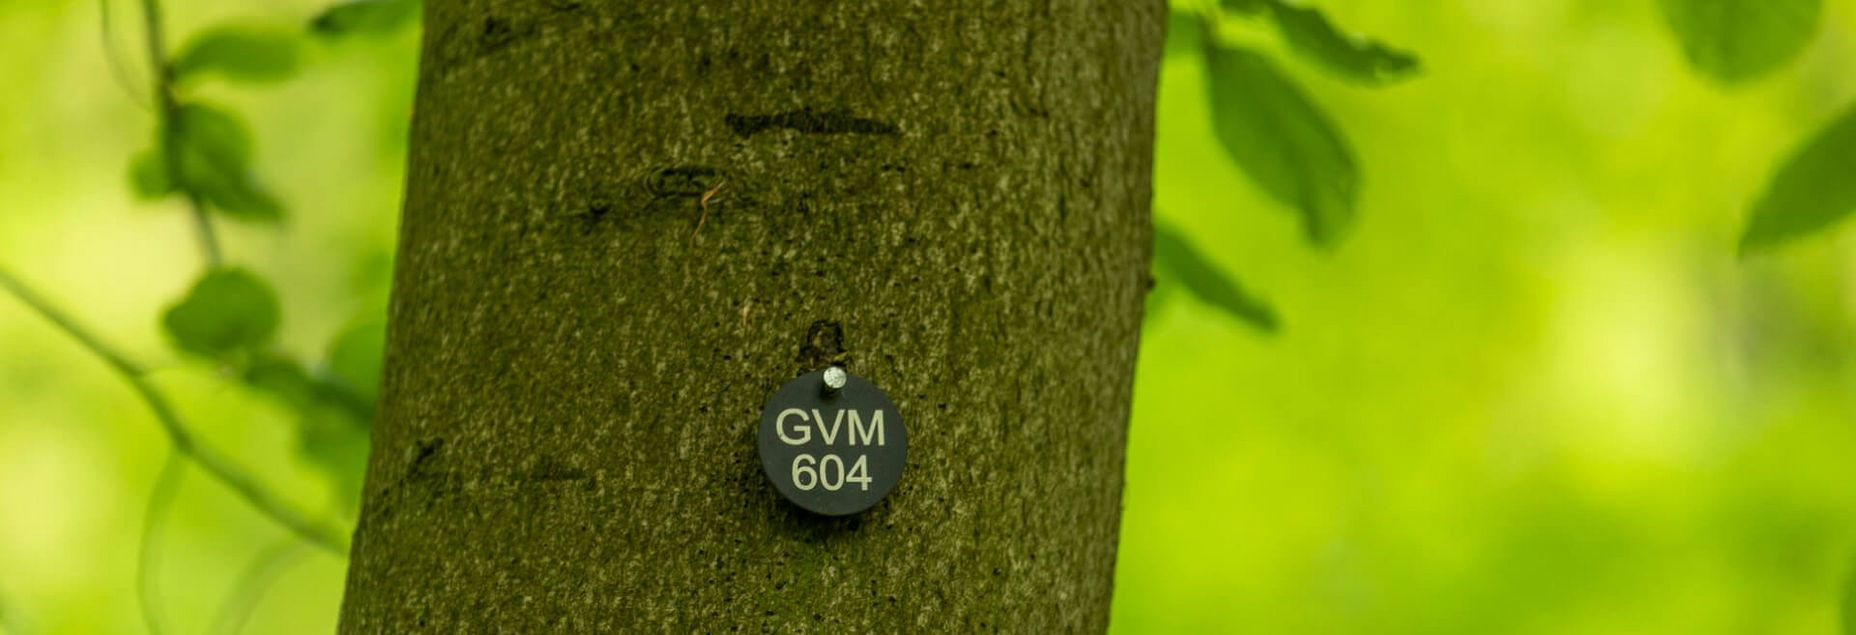 Baum GVM 604 - Plakette